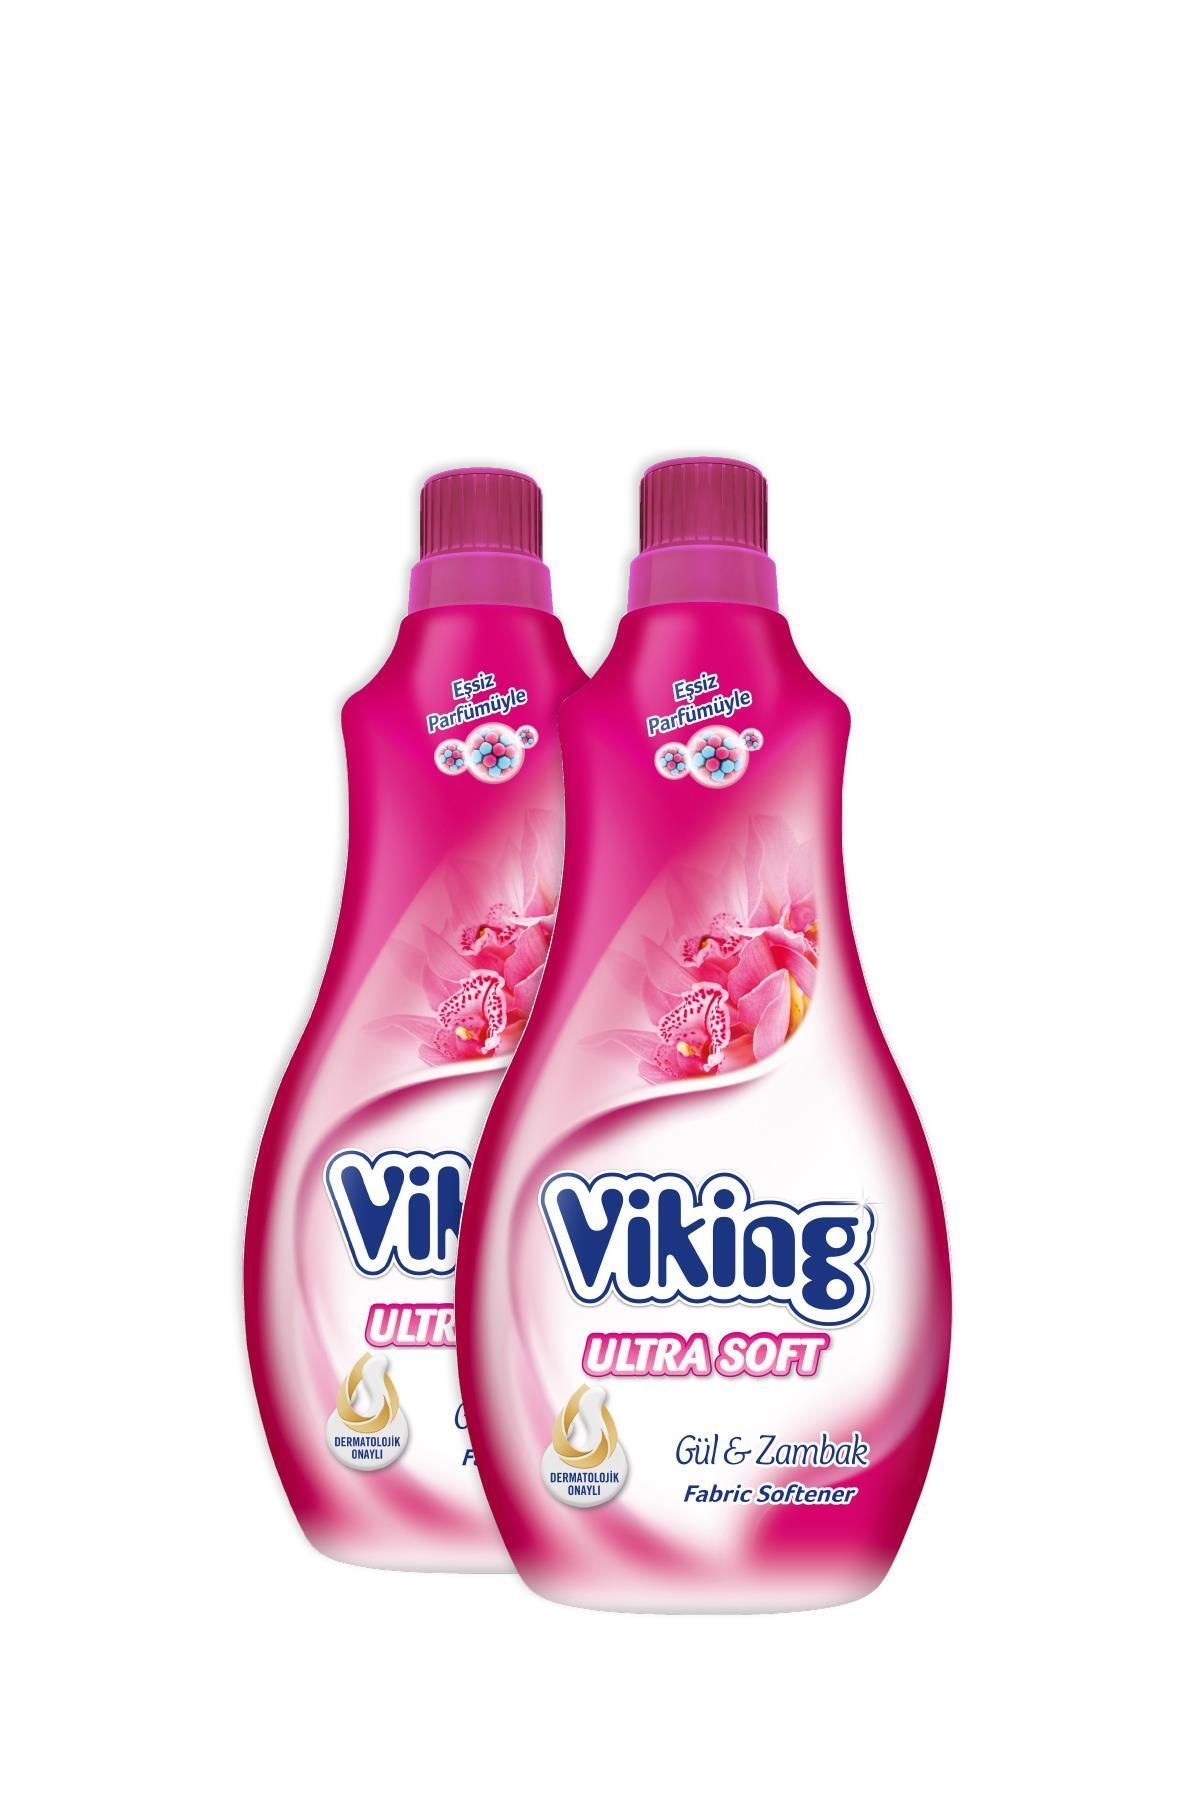 Viking Yumuşatıcı Soft Gül&Zambak 1400 ml 2 Adet